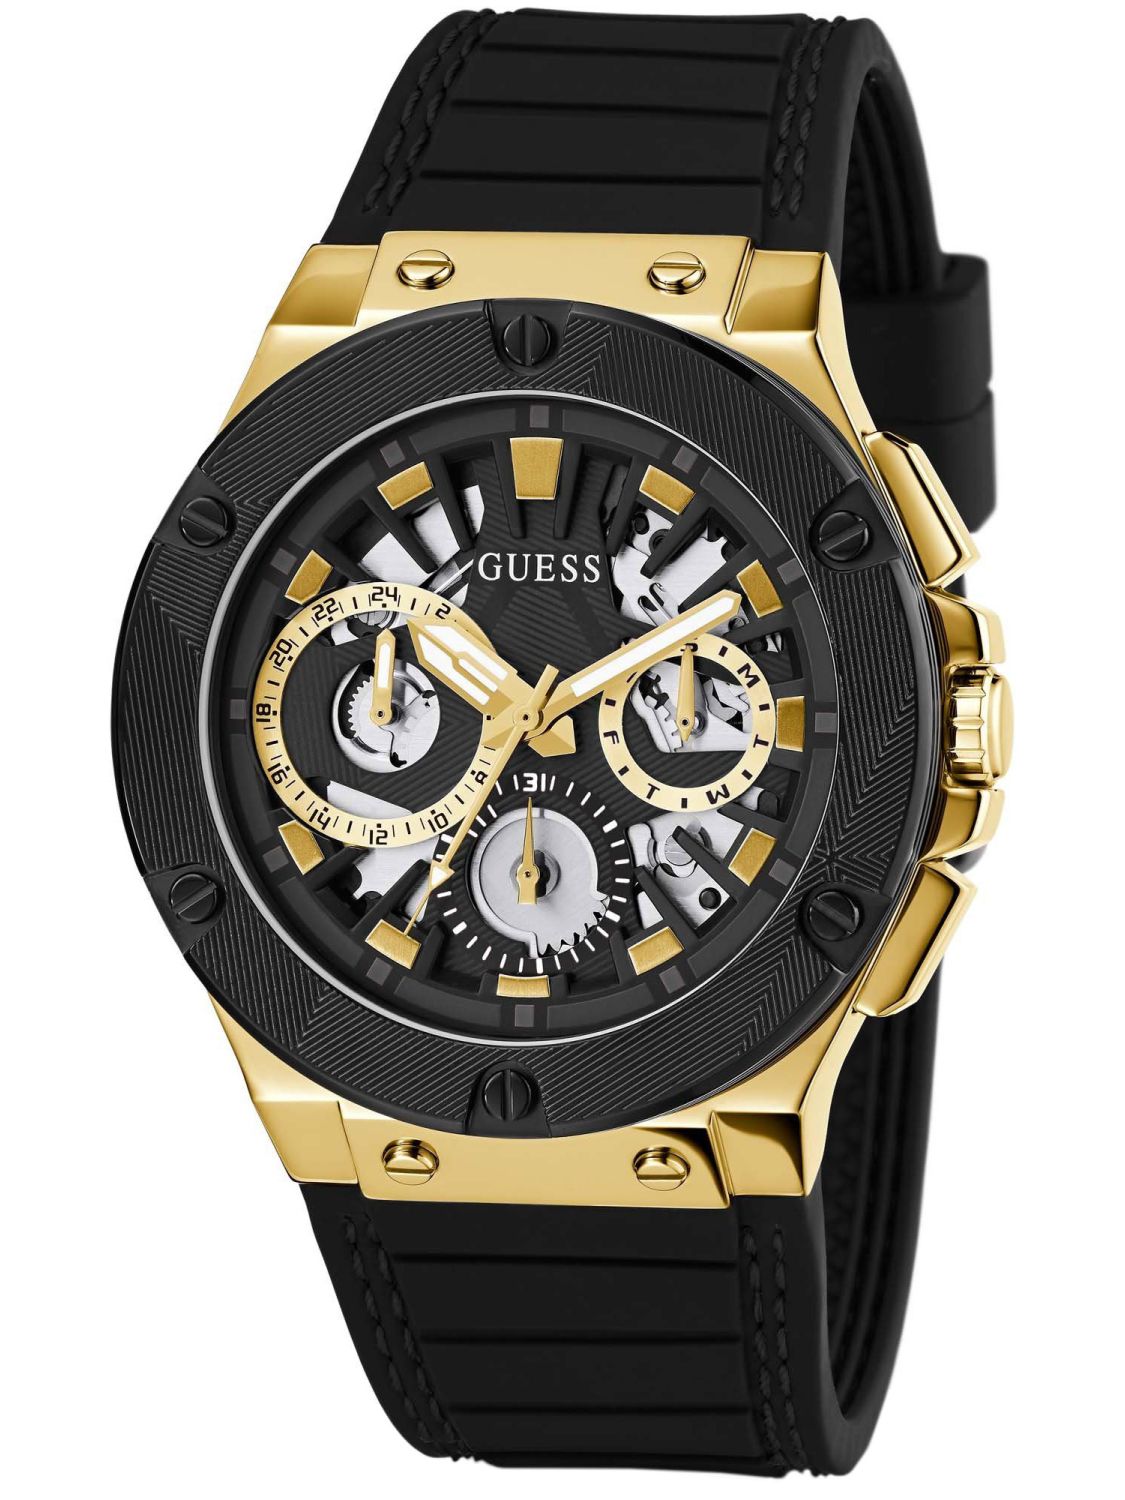 Guess Men's Watch Multifunction Circuit Black/Gold Tone GW0487G5 • uhrcenter